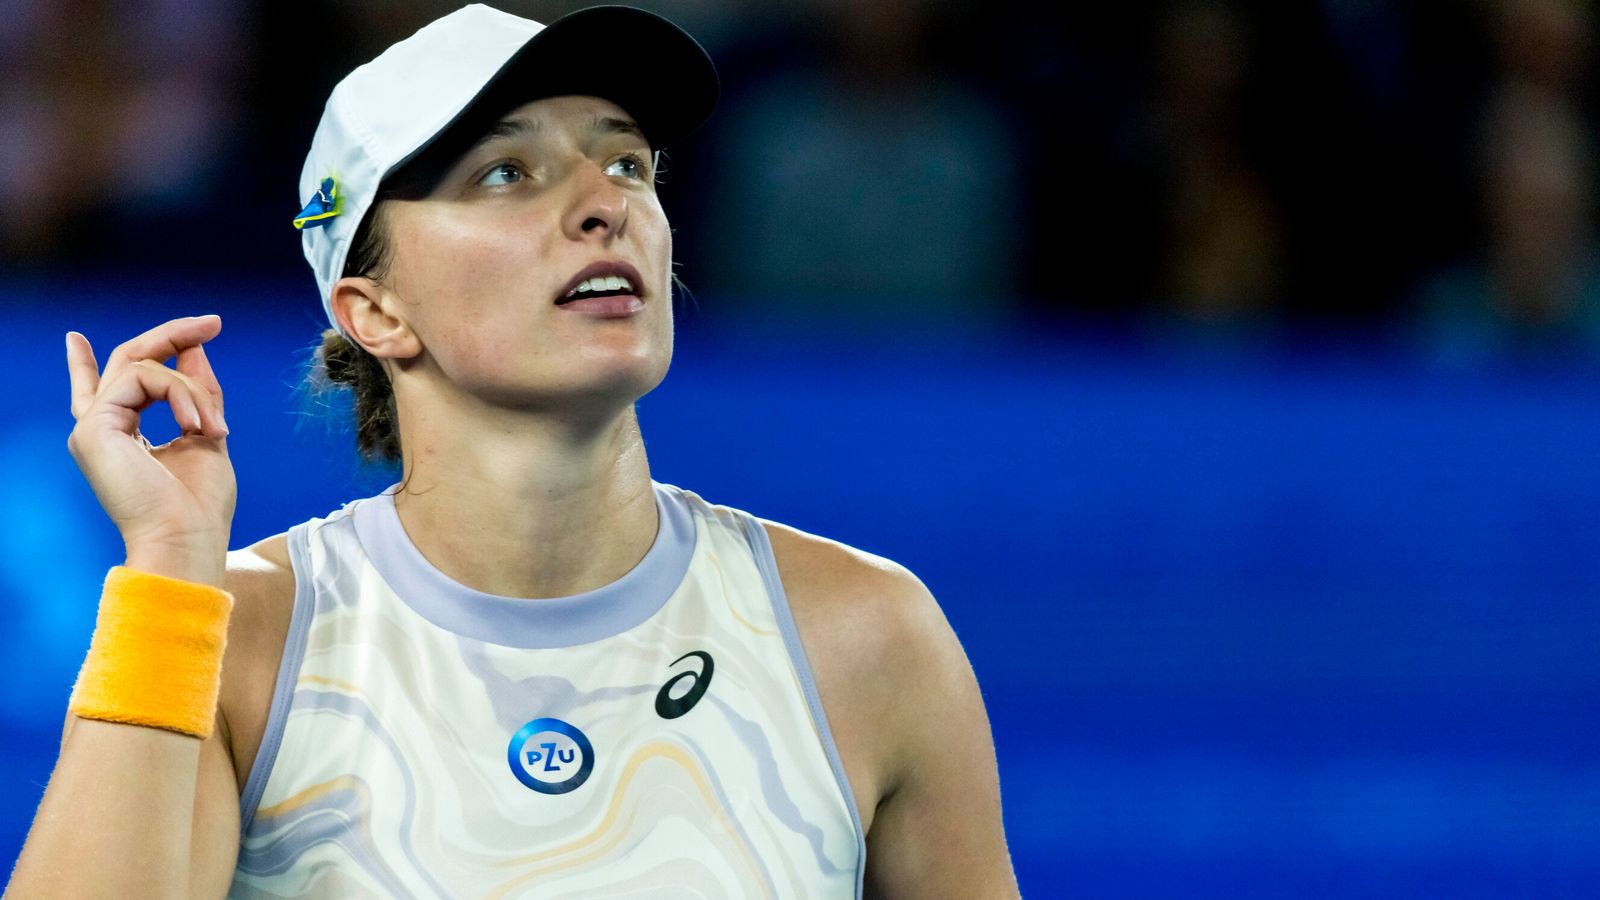 Dubai: Swiatek sweeps past Samsonova in Round of 16